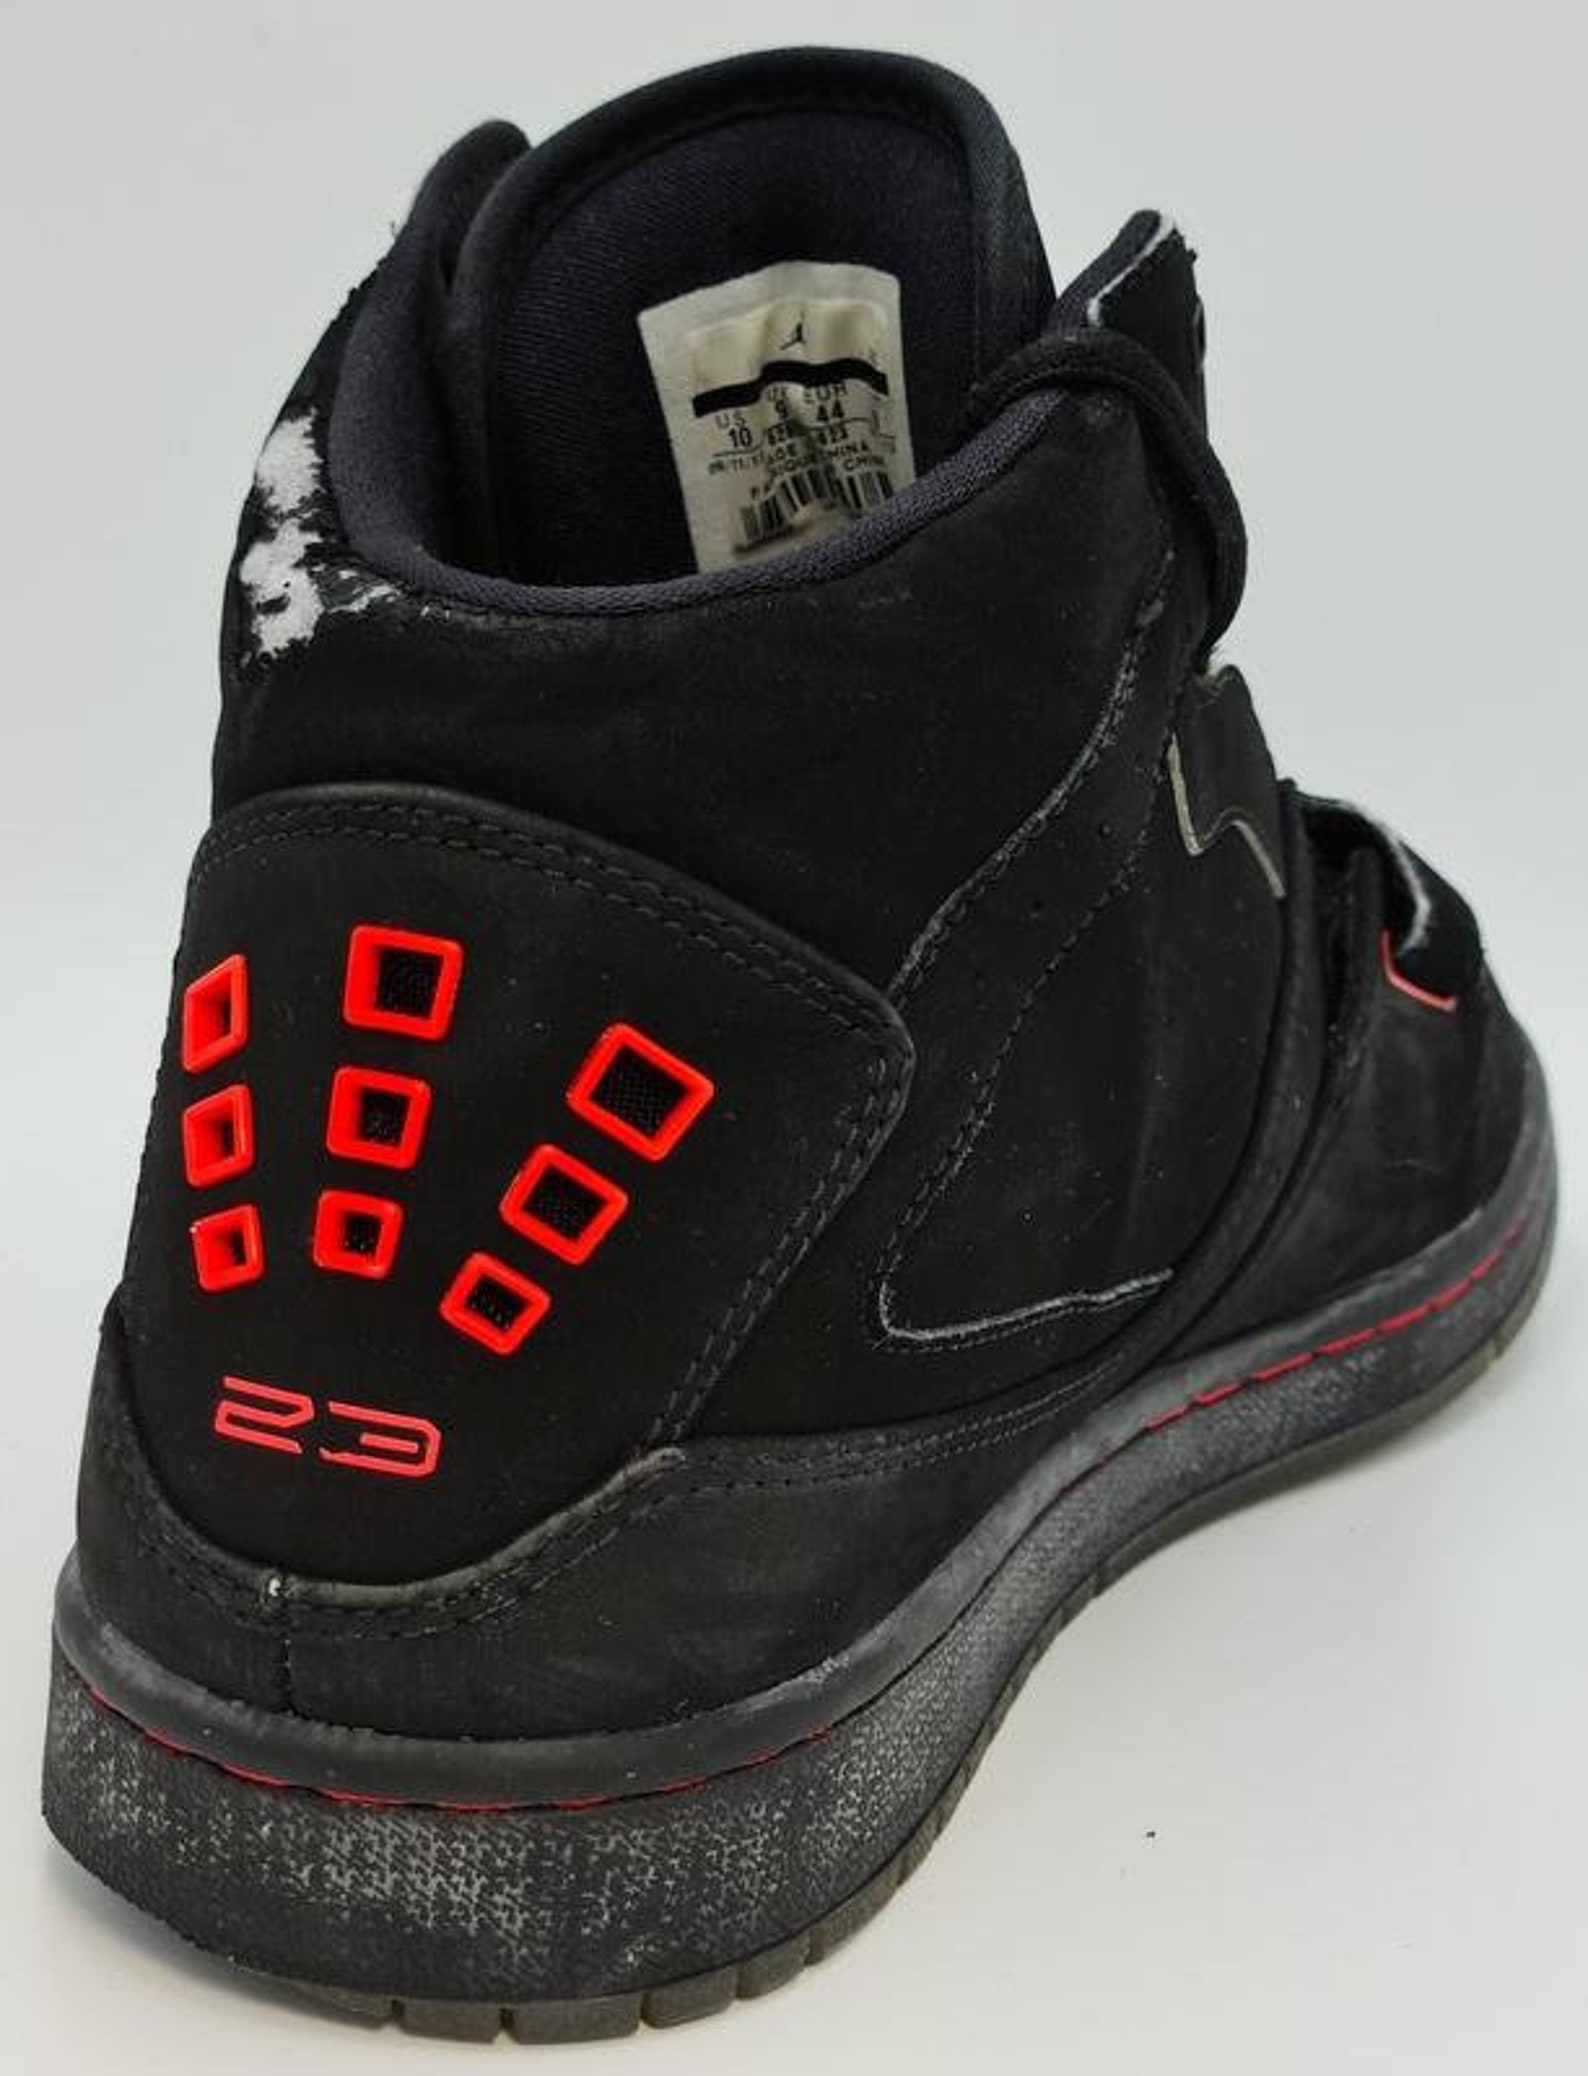 Nike Air Jordan 1 Flight Strap Trainers Black/Infrared | Etsy